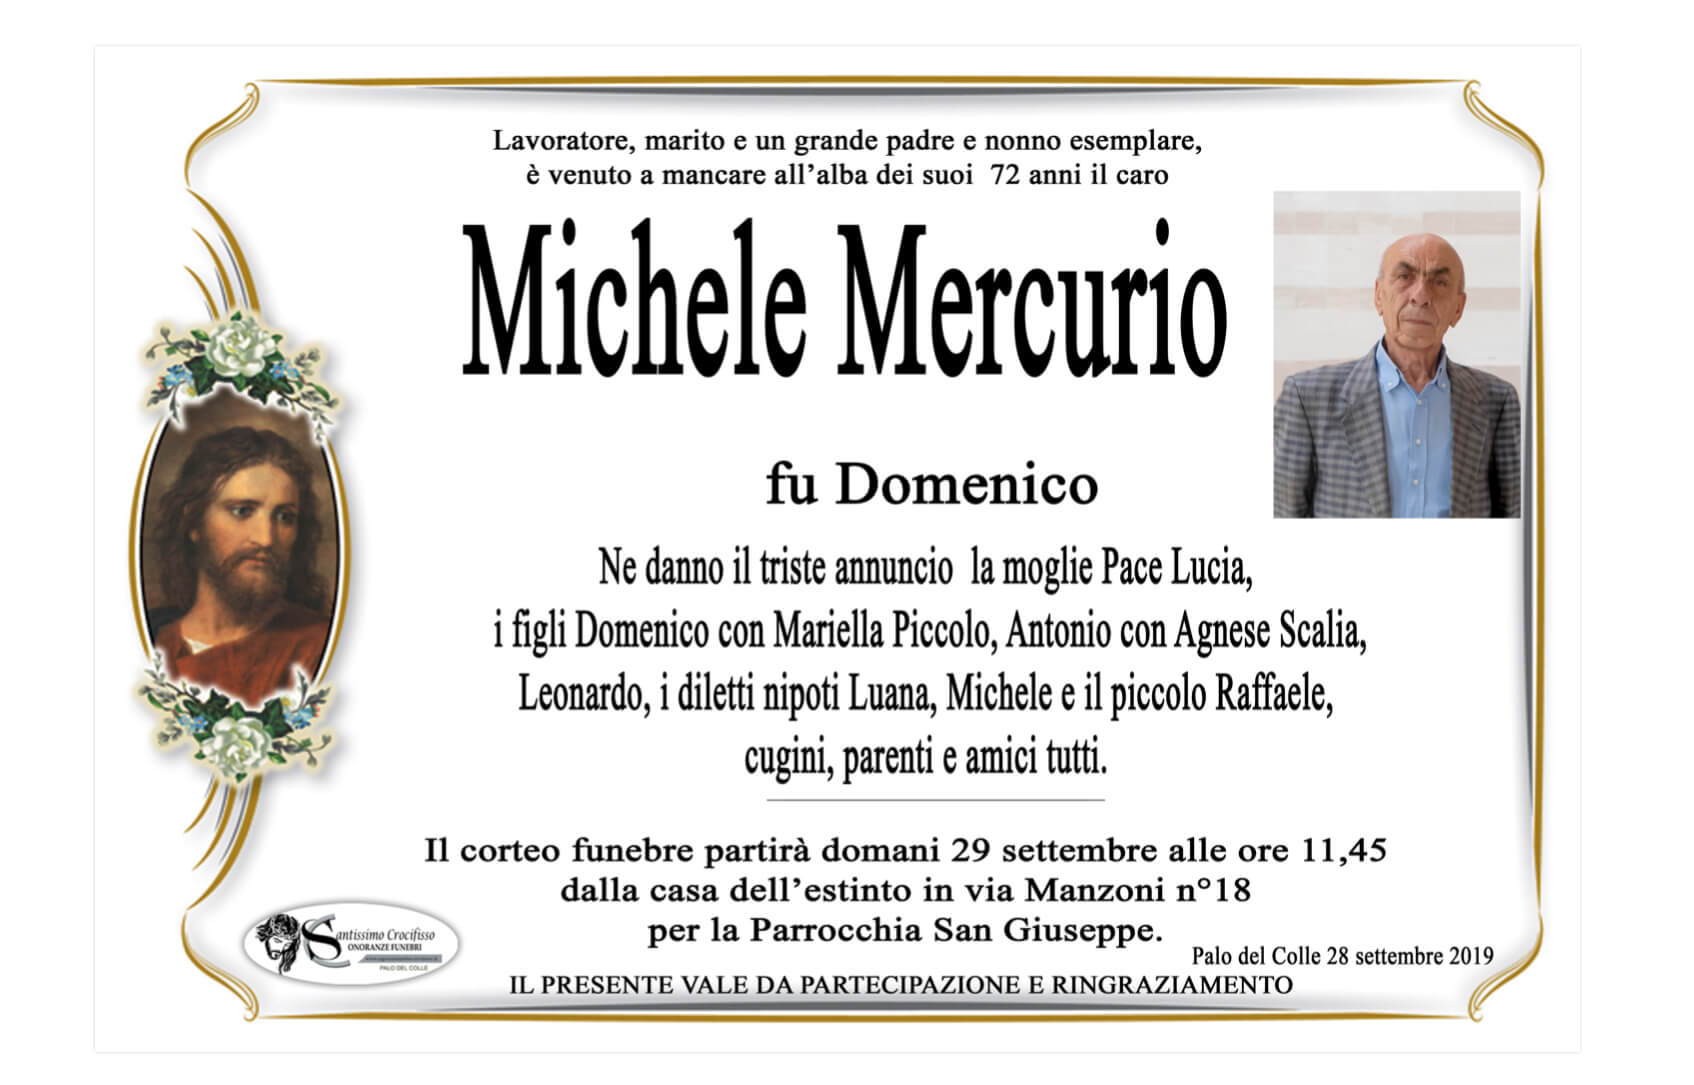 Michelangelo Mercurio